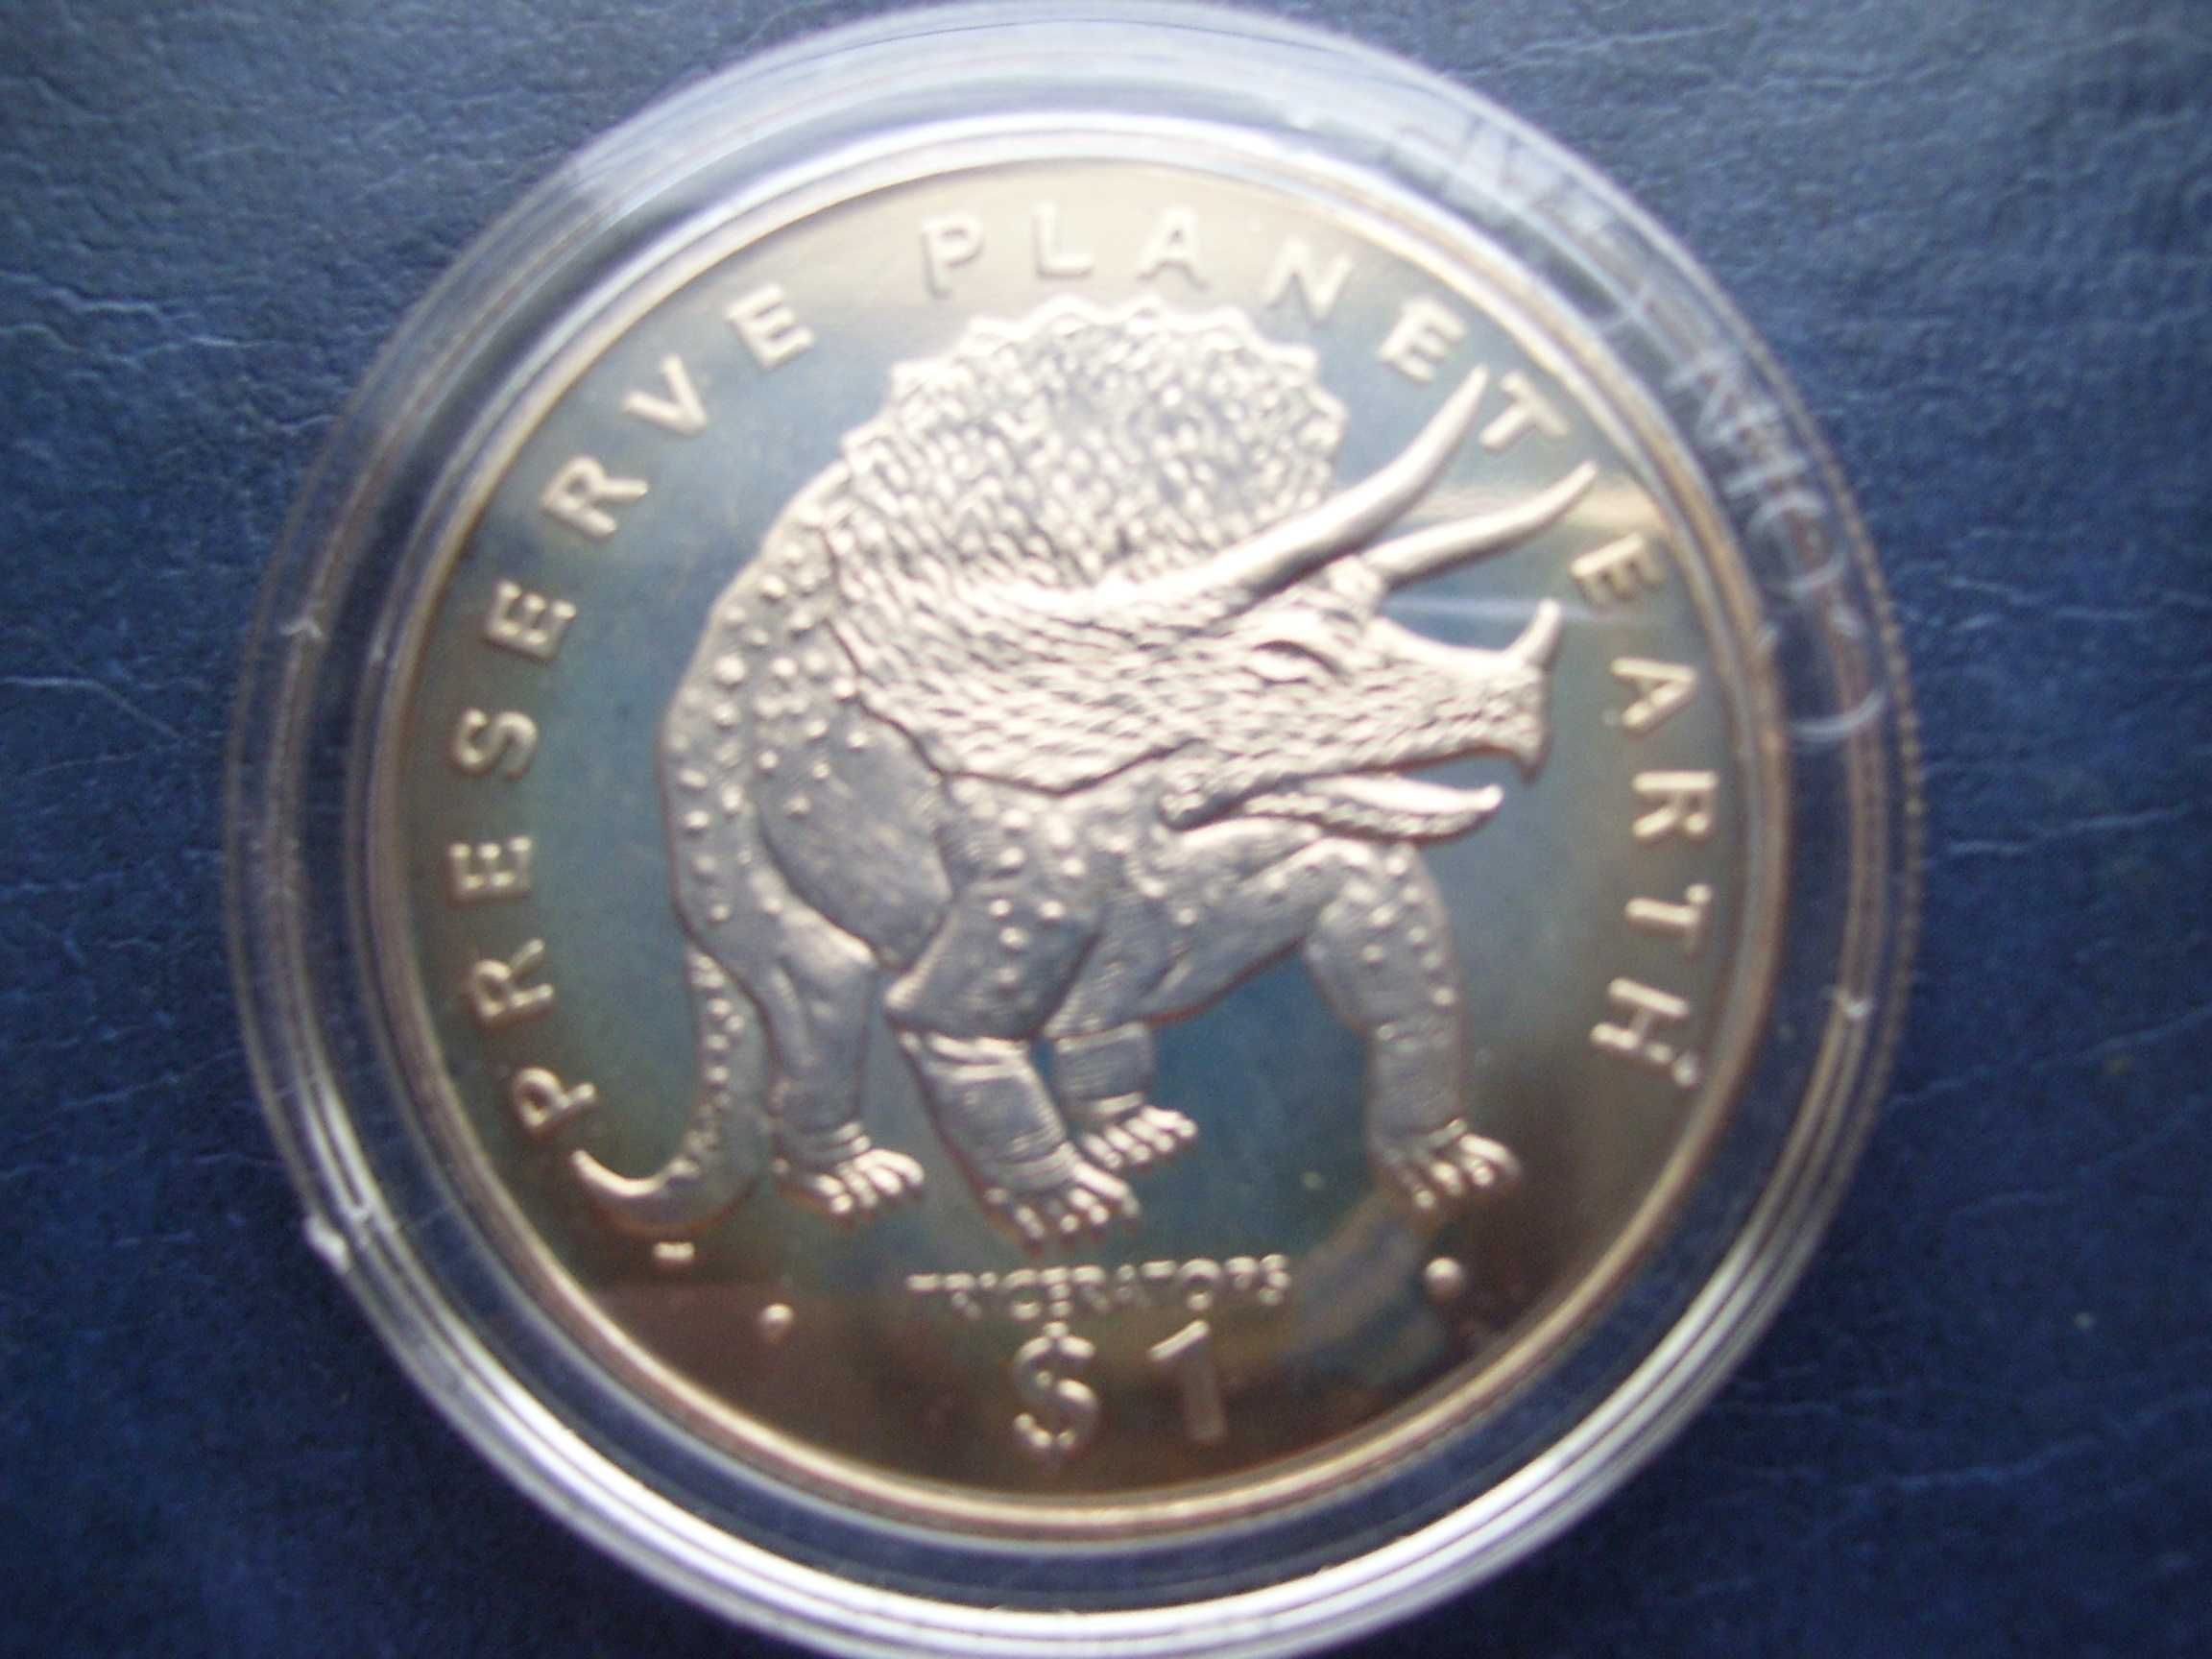 Stare monety 1 dolar 1993 Triceratops Erytrea stan menniczy